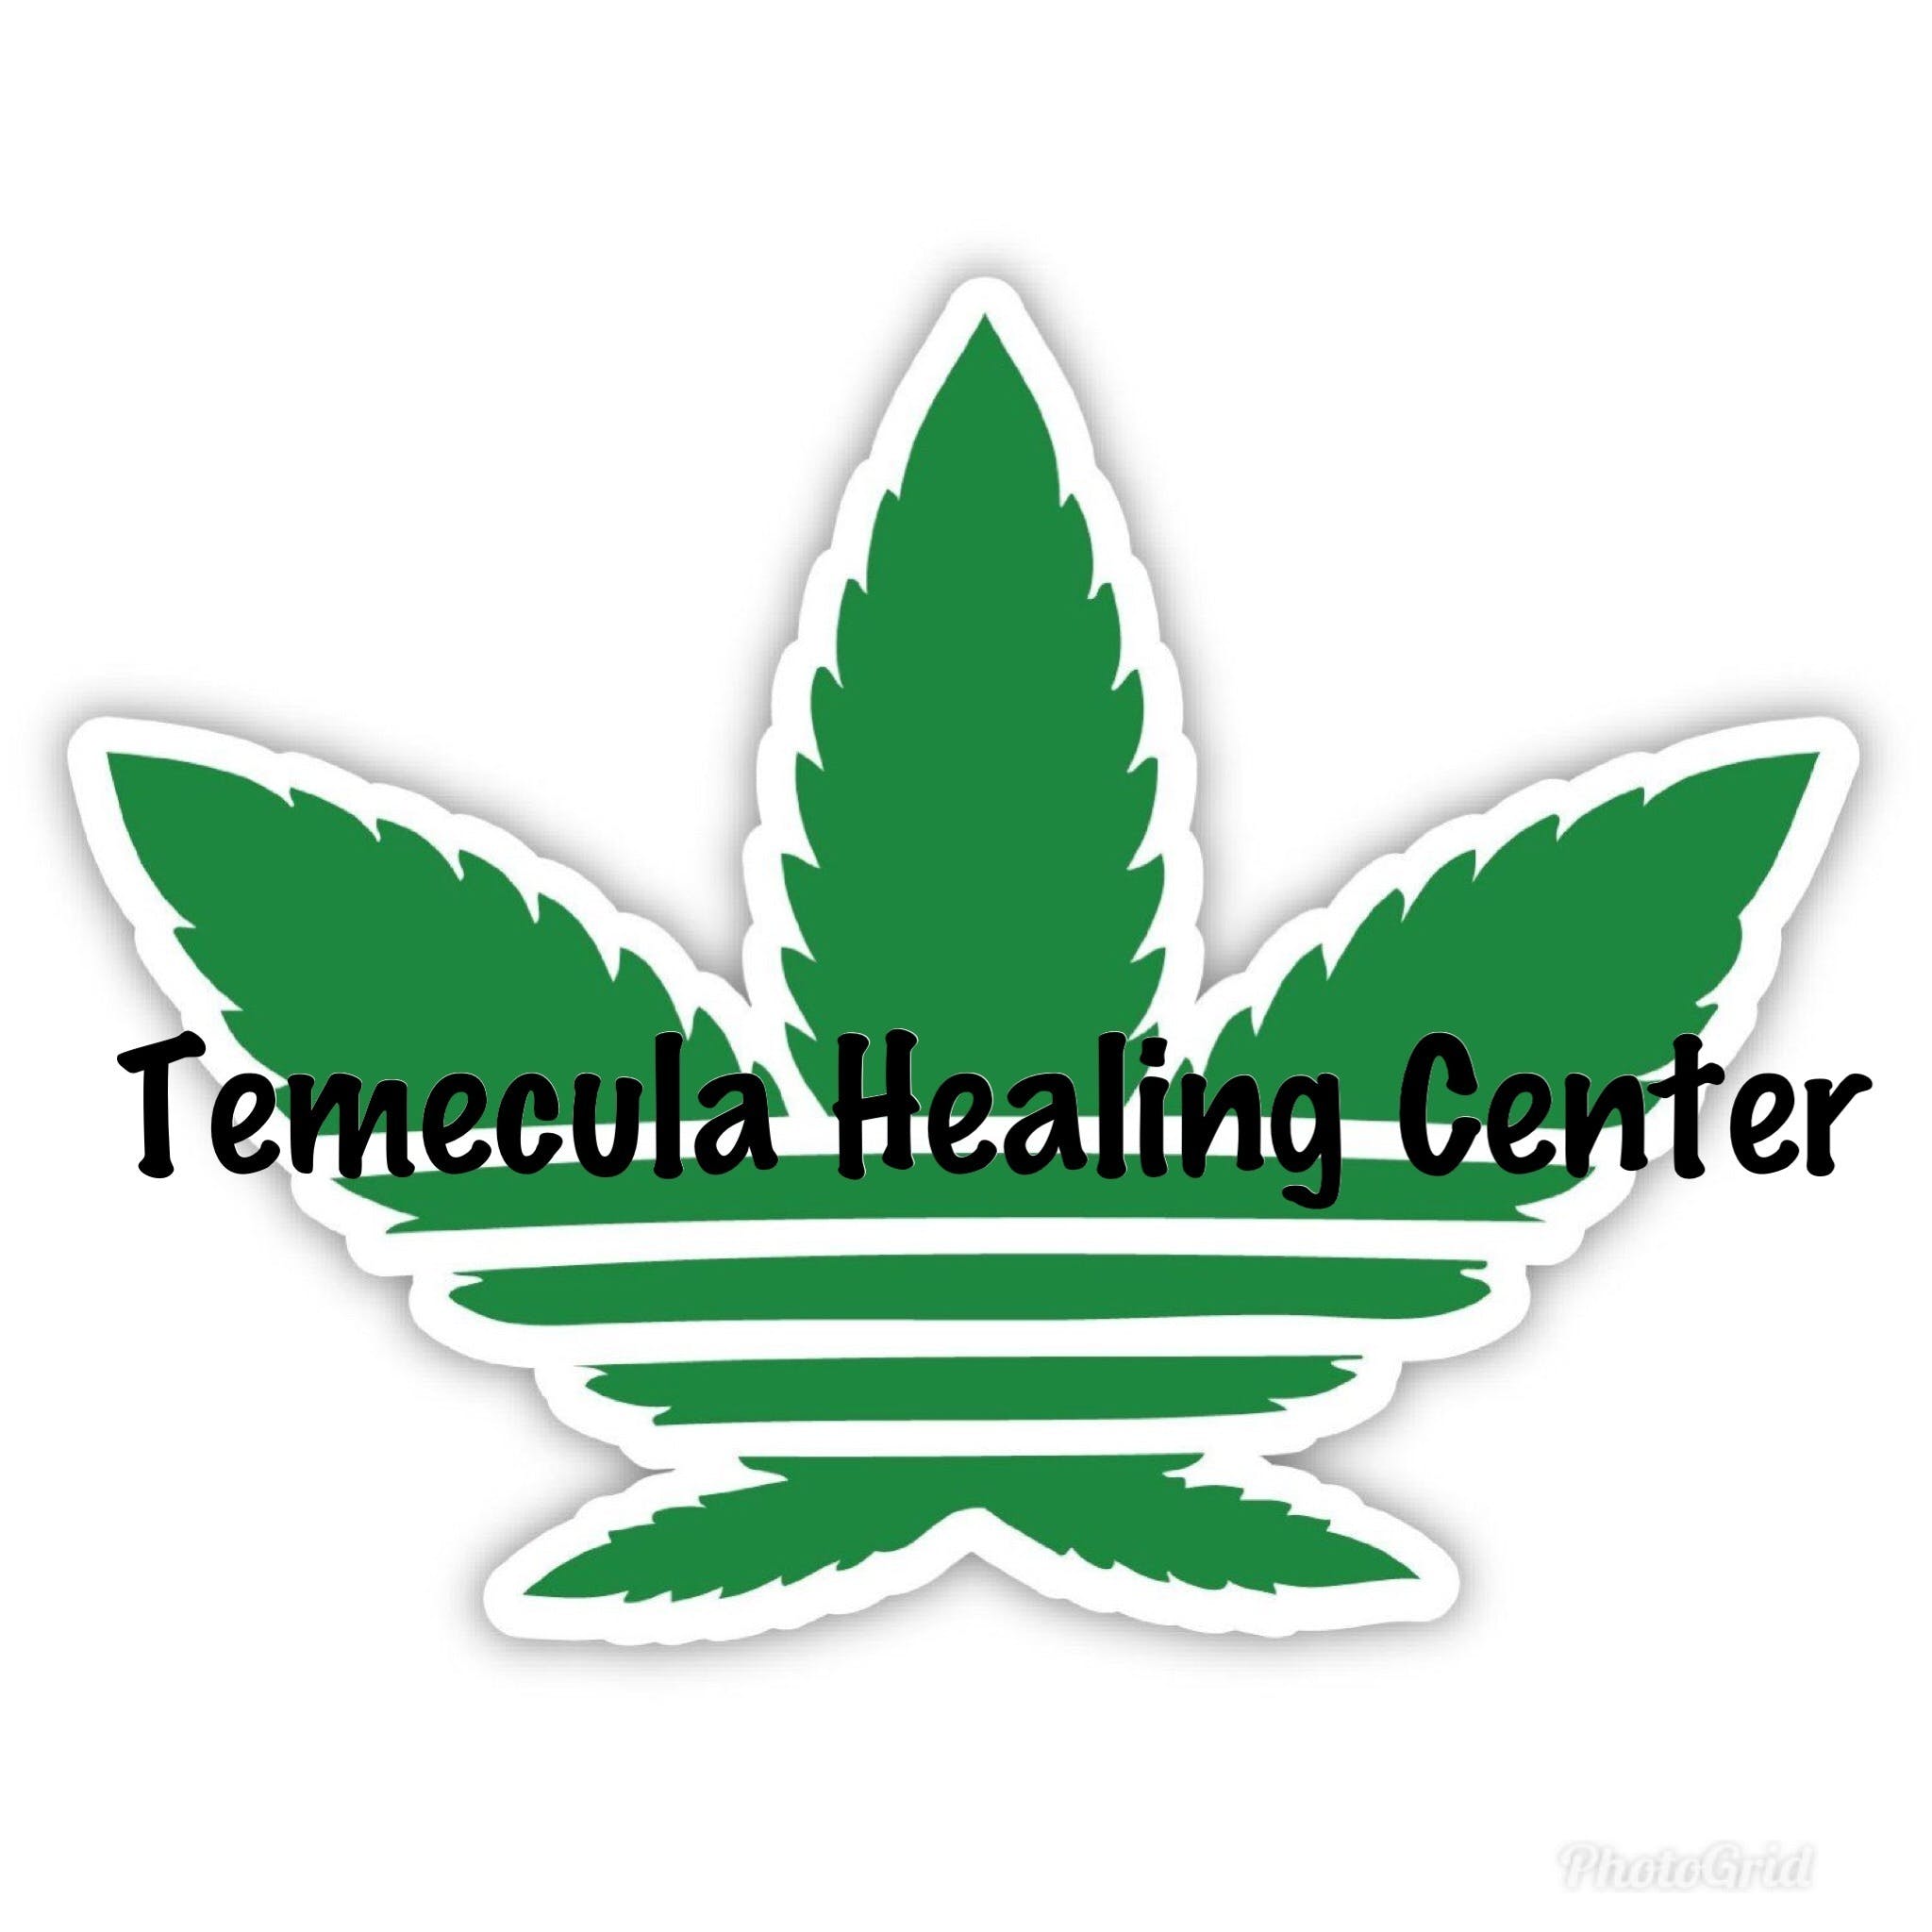 Temecula Healing Center - Medical Marijuana Doctors - Cannabizme.com